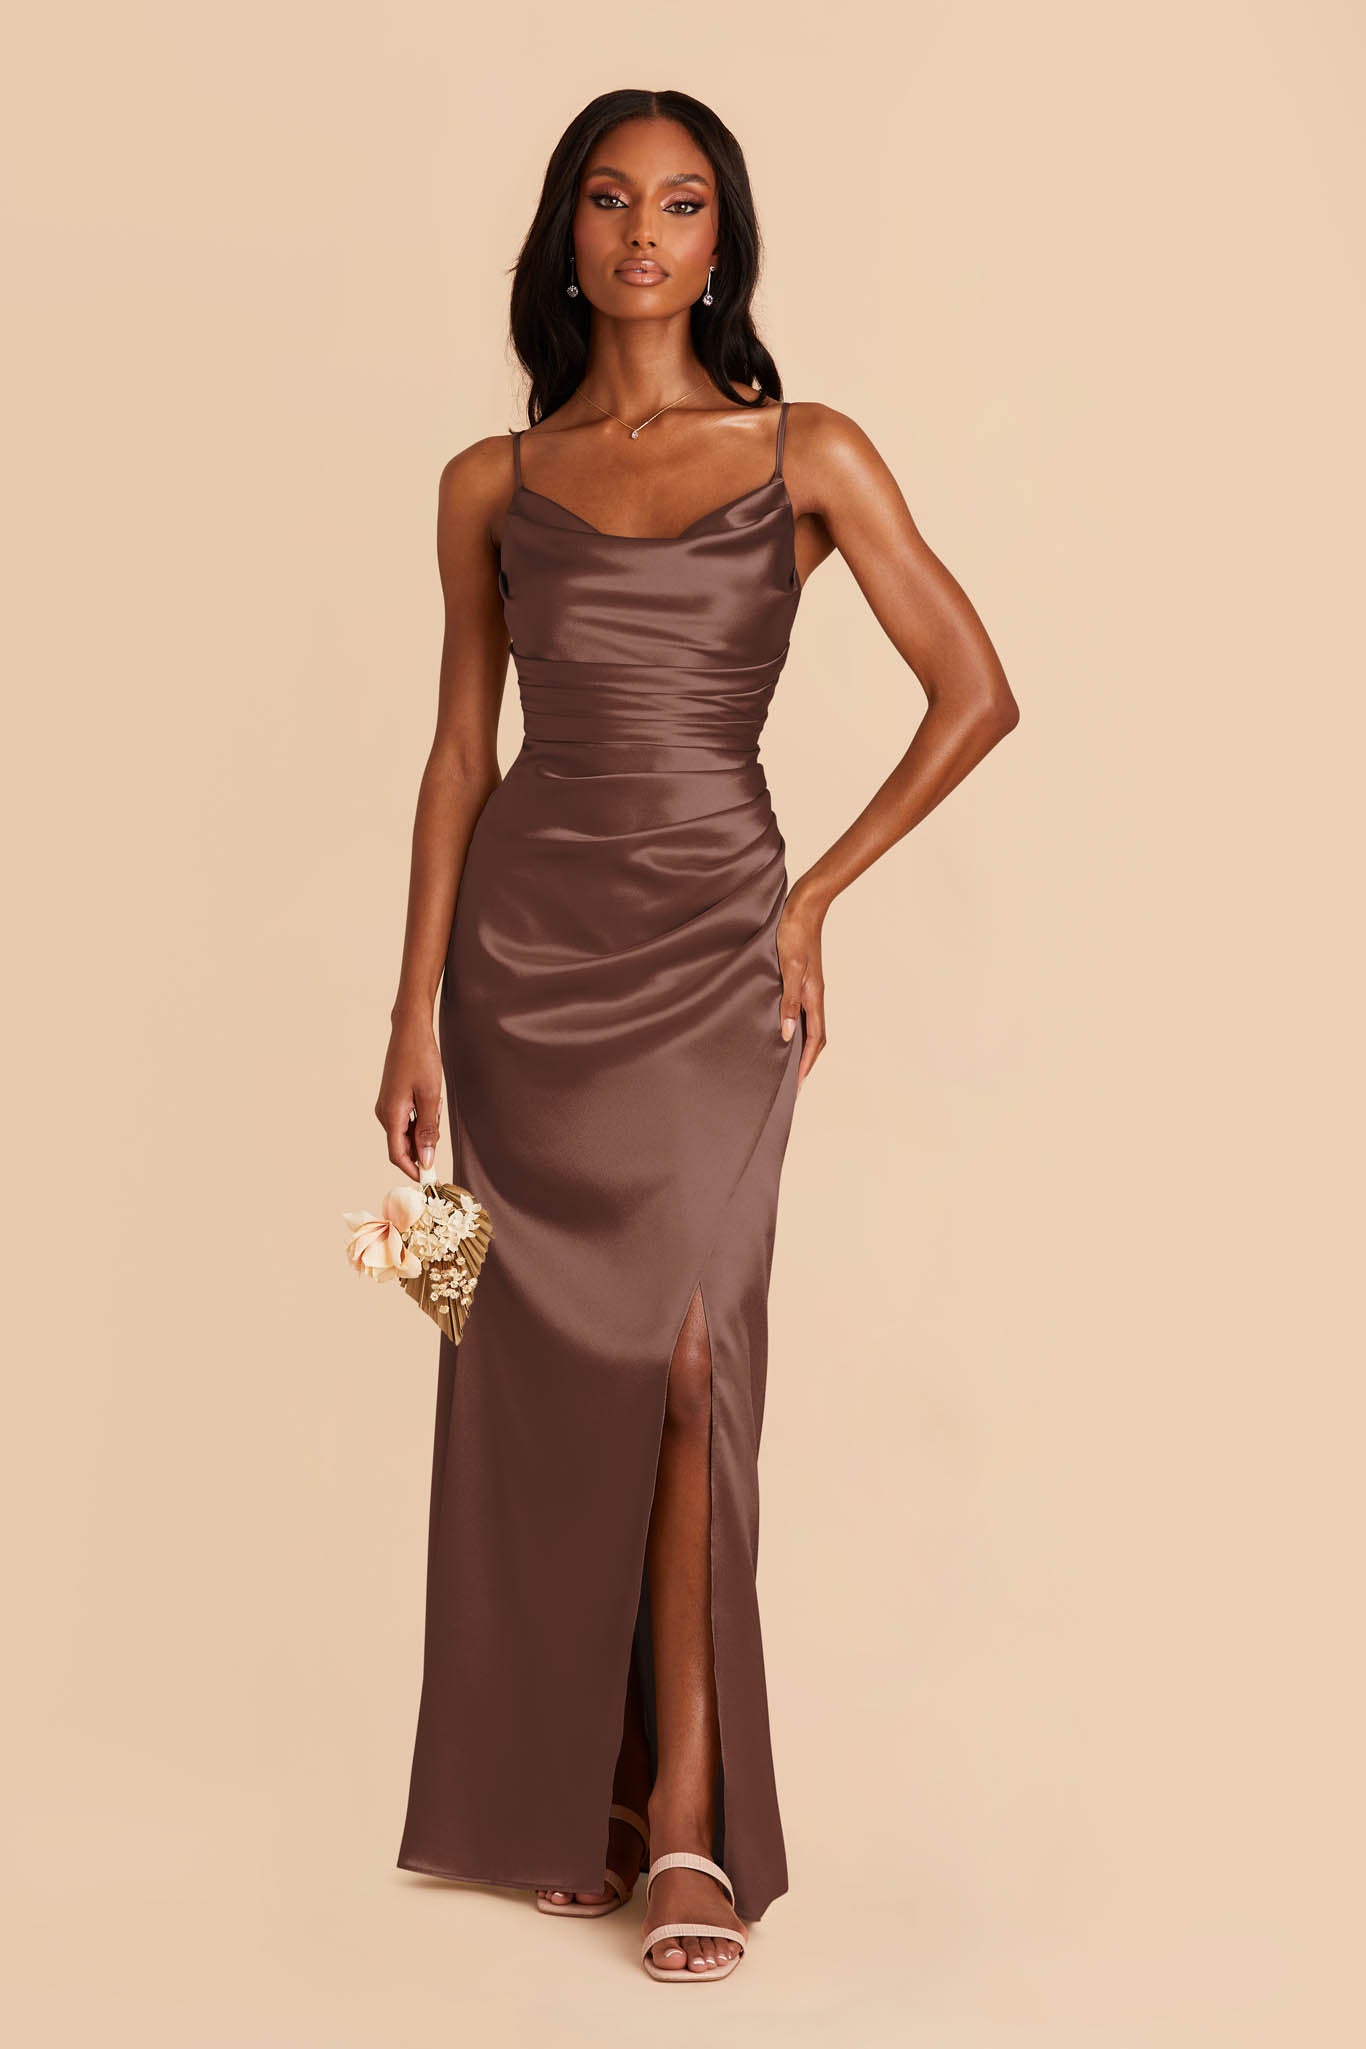 chocolate brown dress